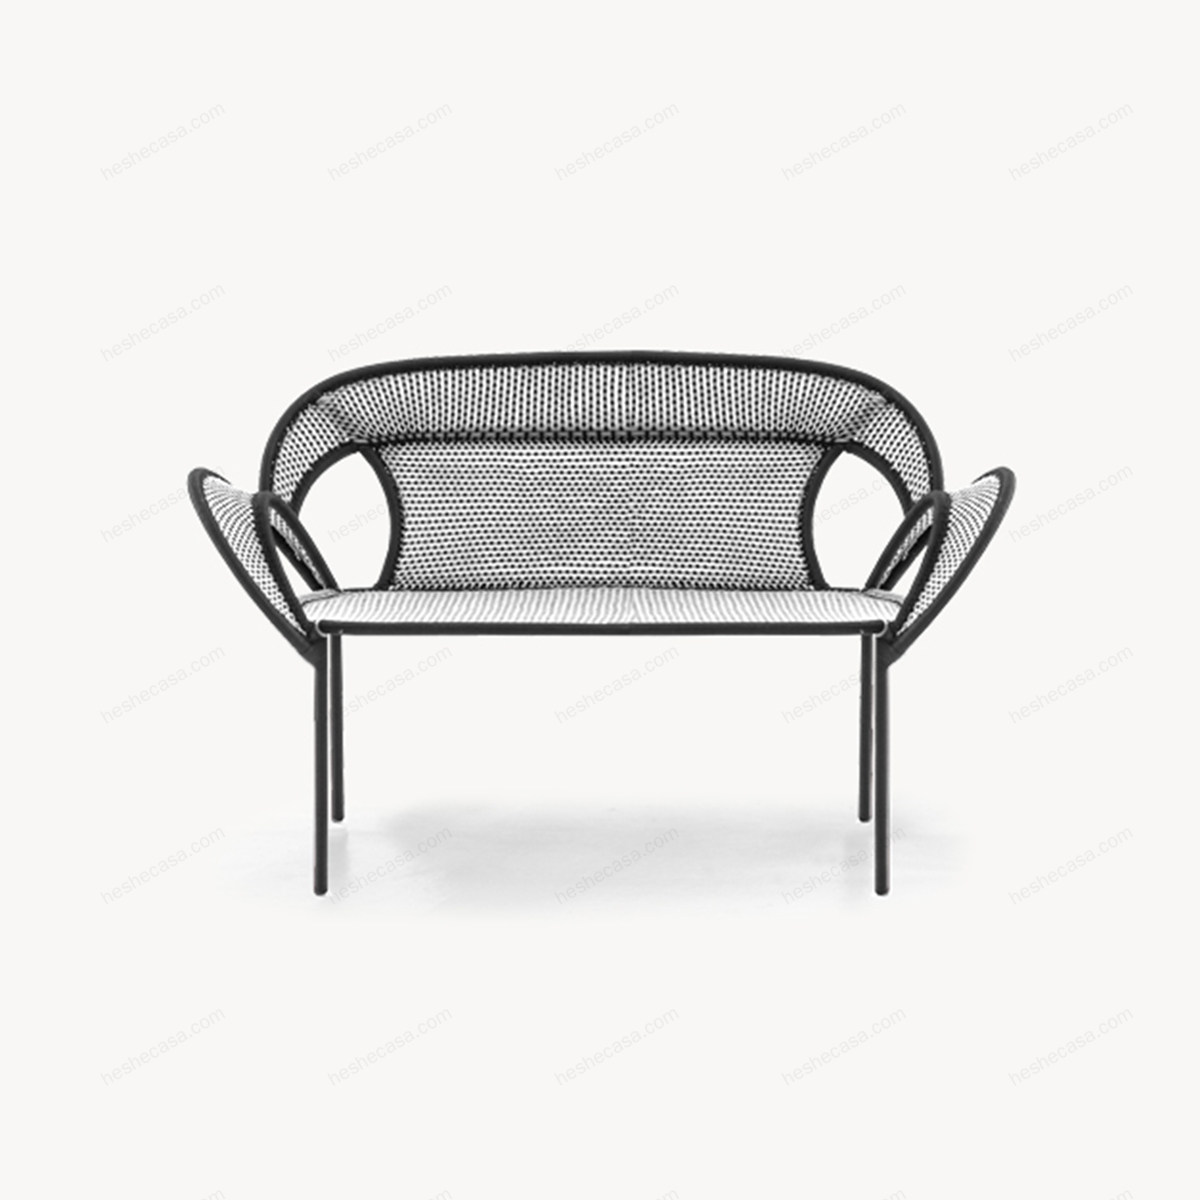 Banjooli-2 户外长凳/长椅